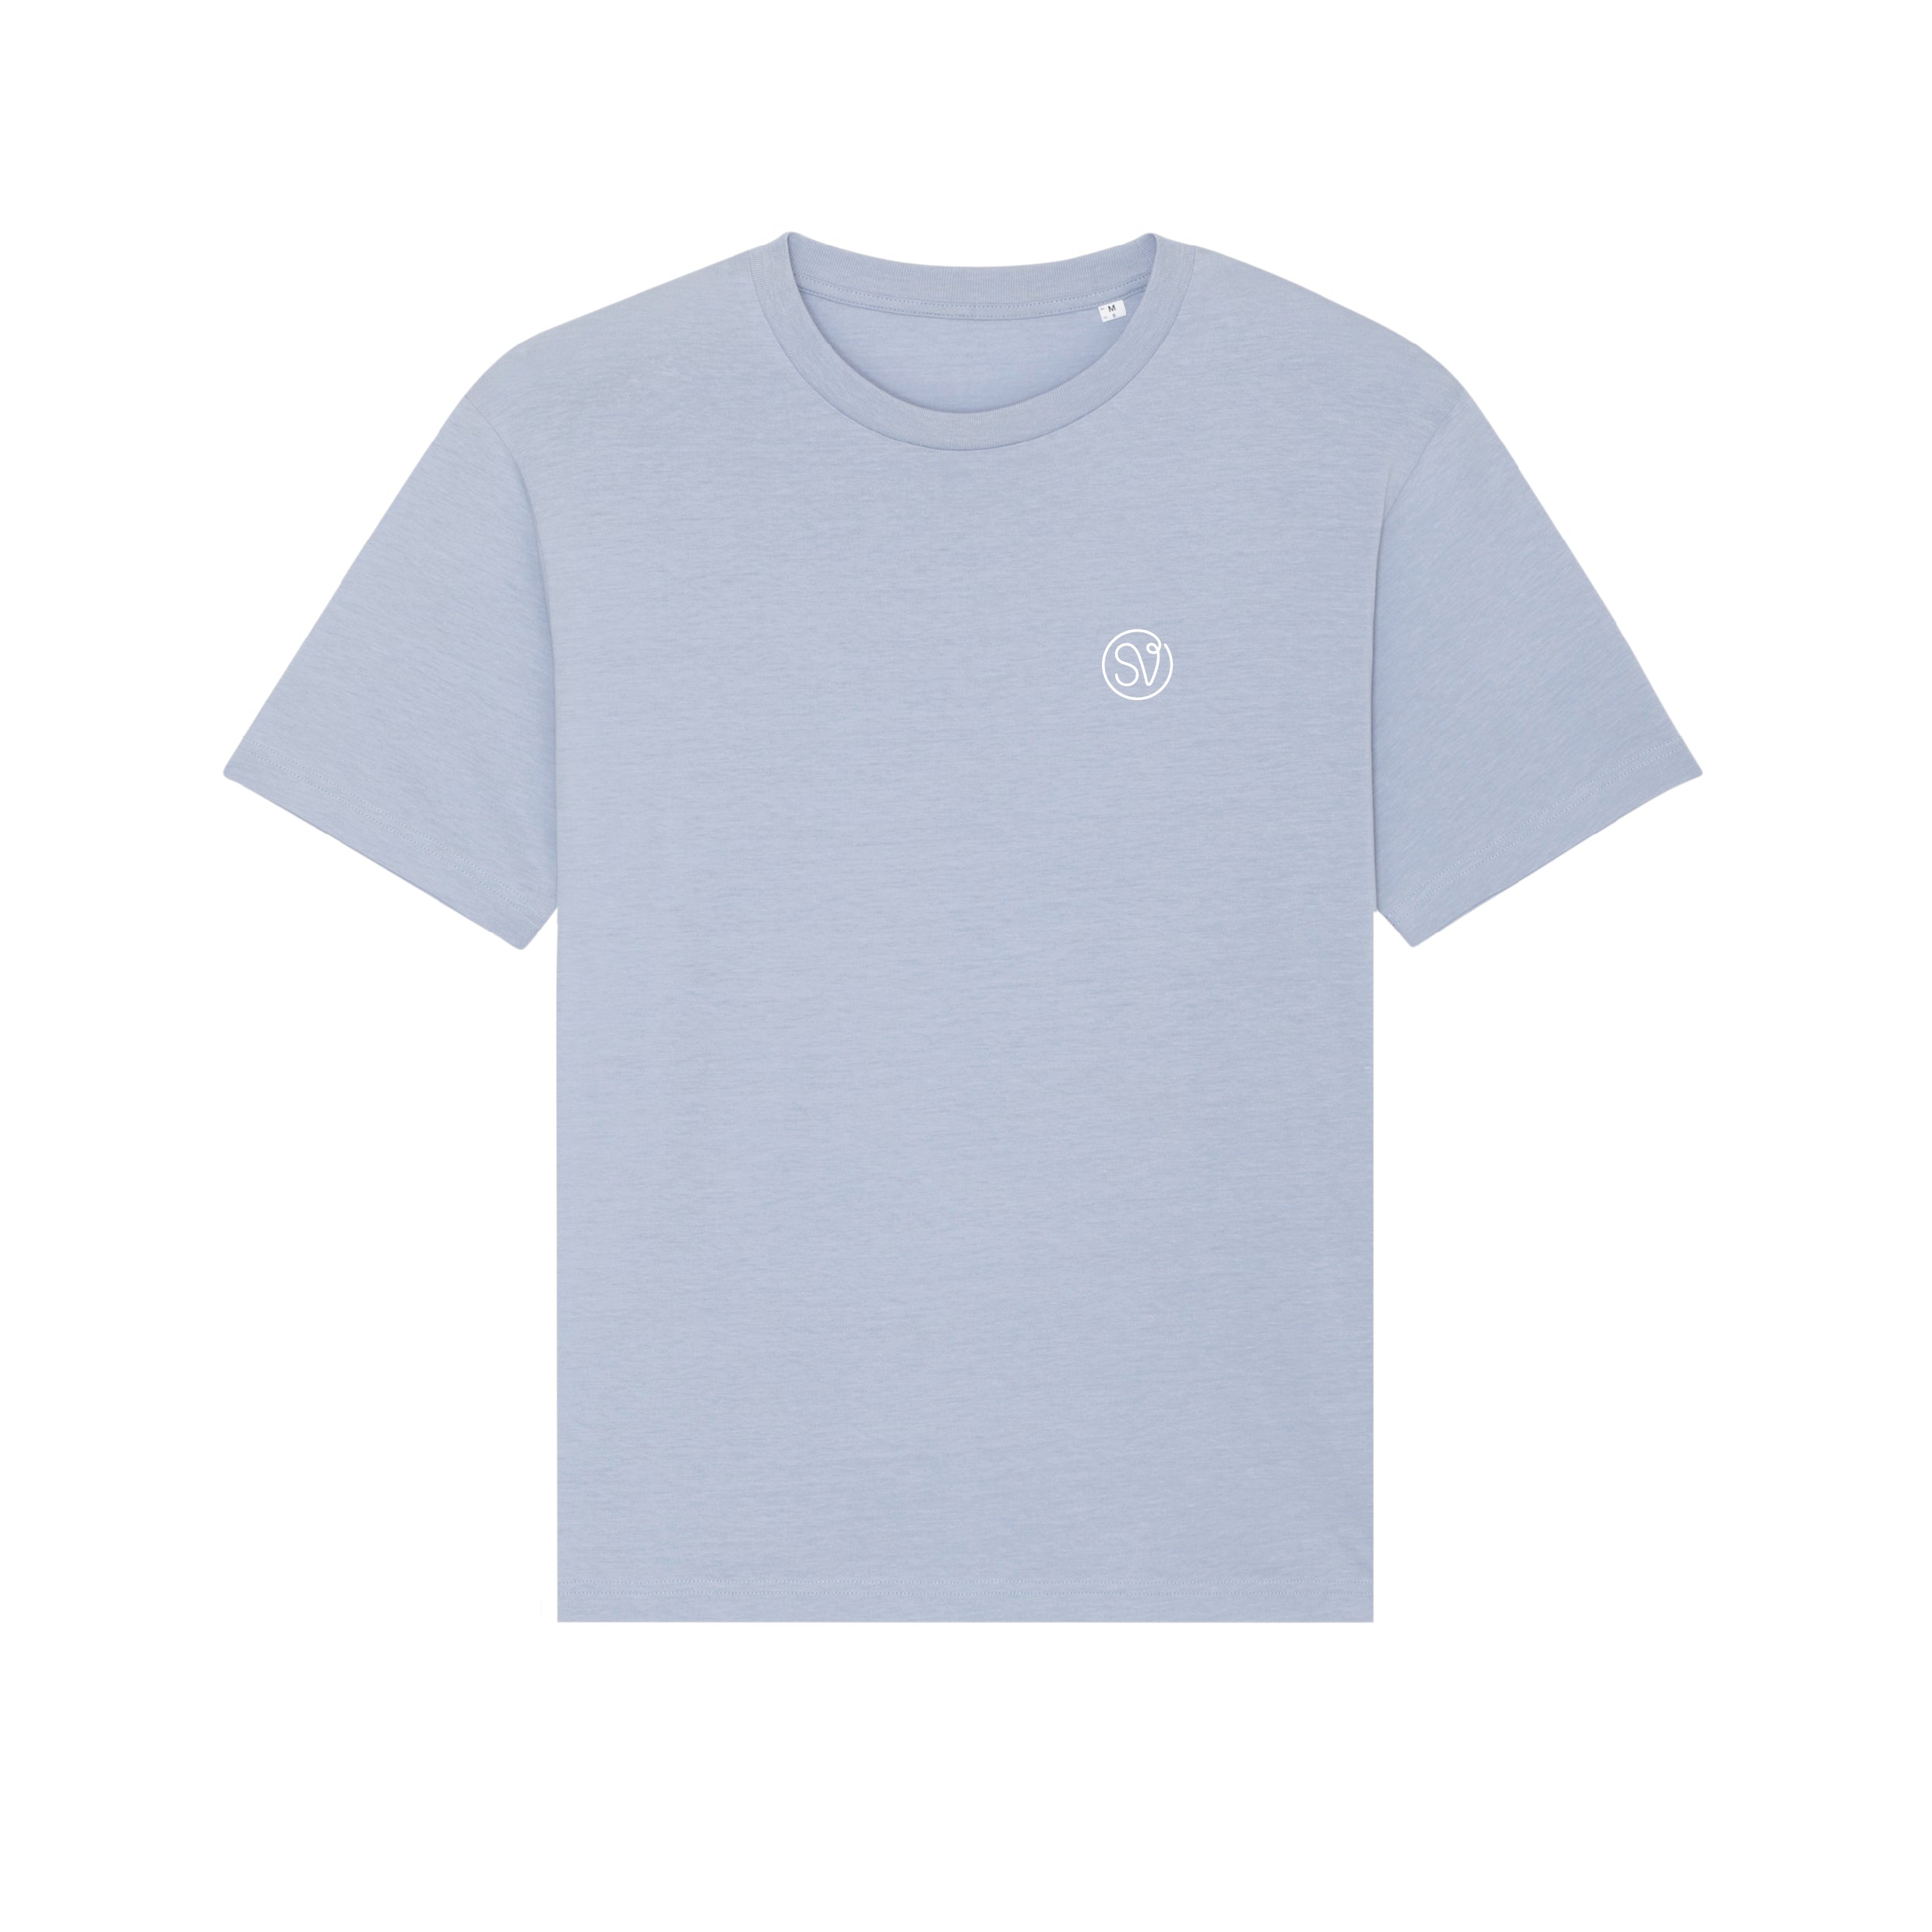 Camiseta SV Basic - Serene Blue